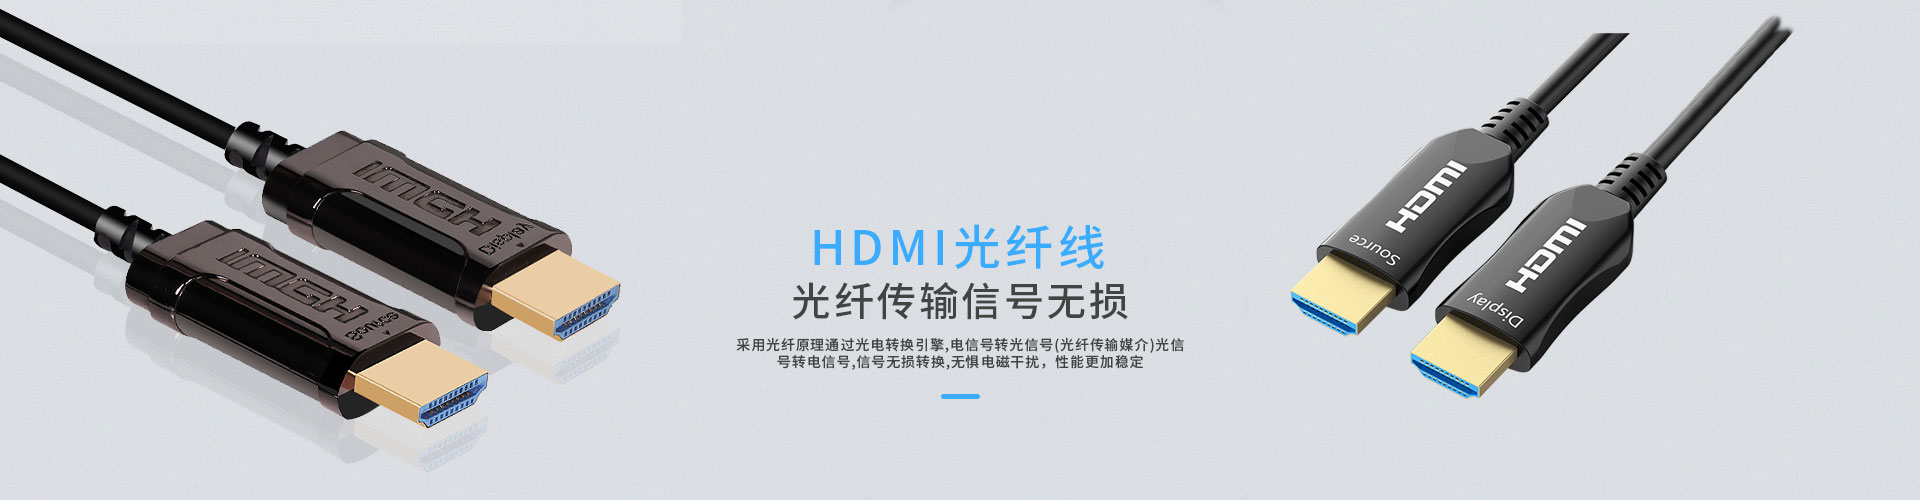 广东hgα030皇冠HDMI